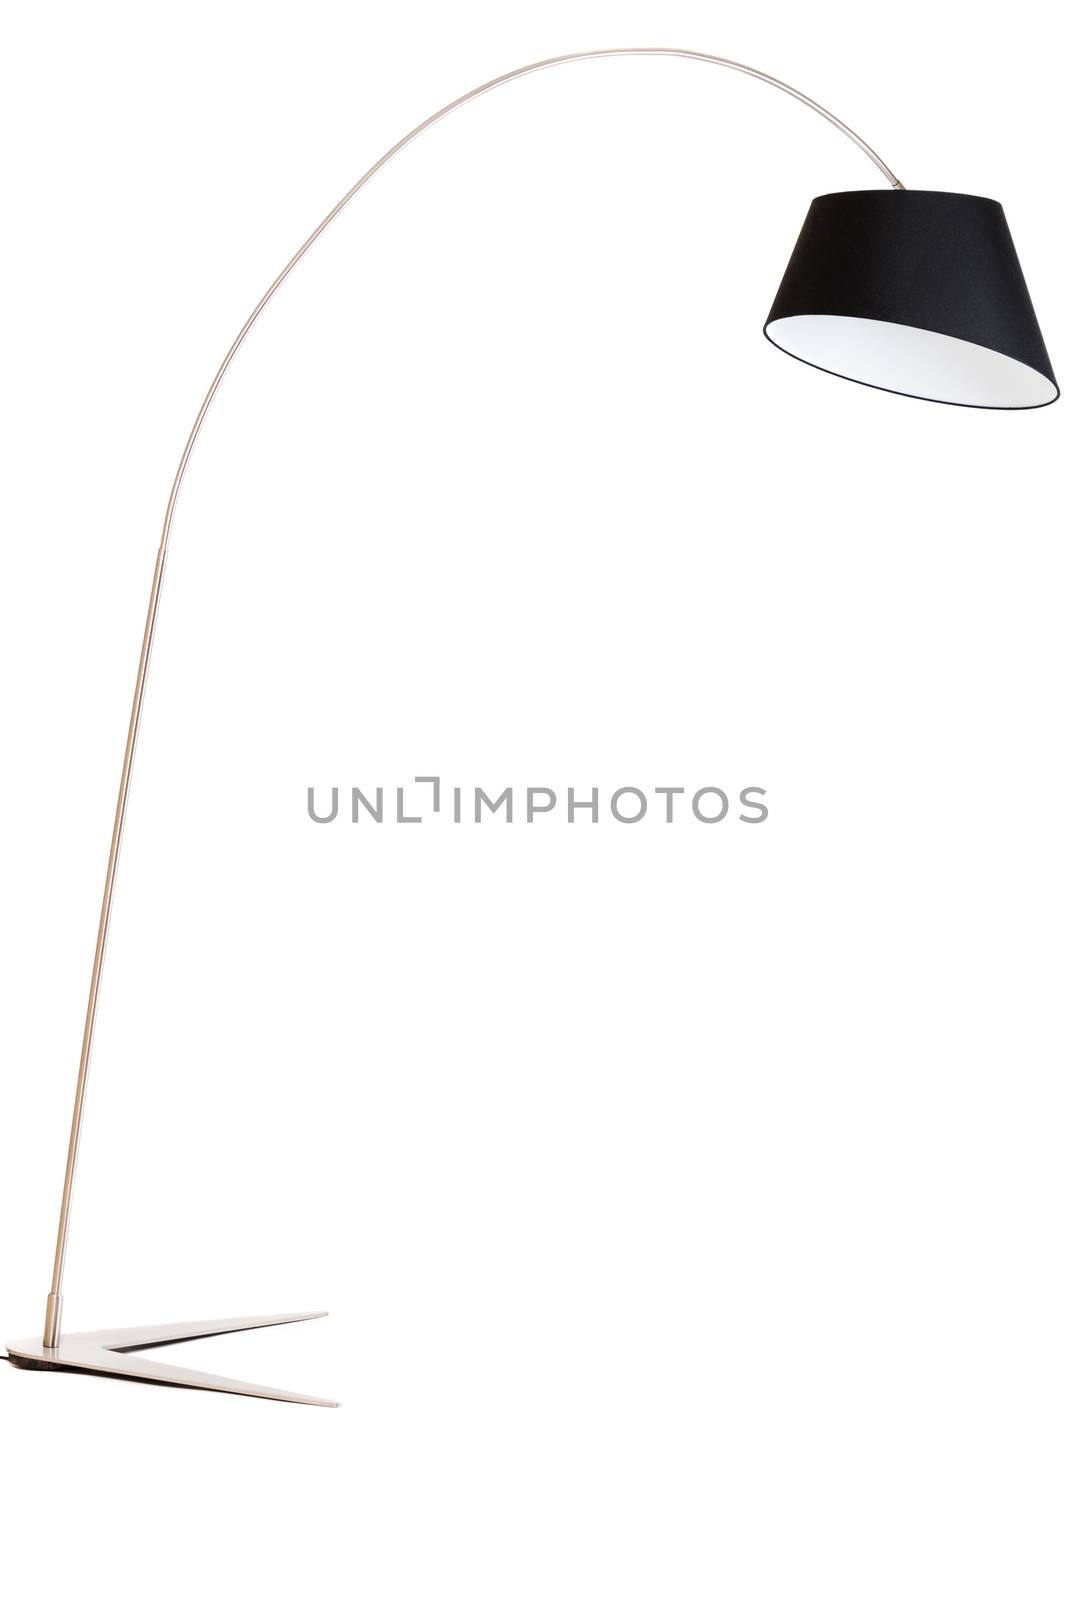 Contemporary metallic and black floor lamp isolated by Nanisimova